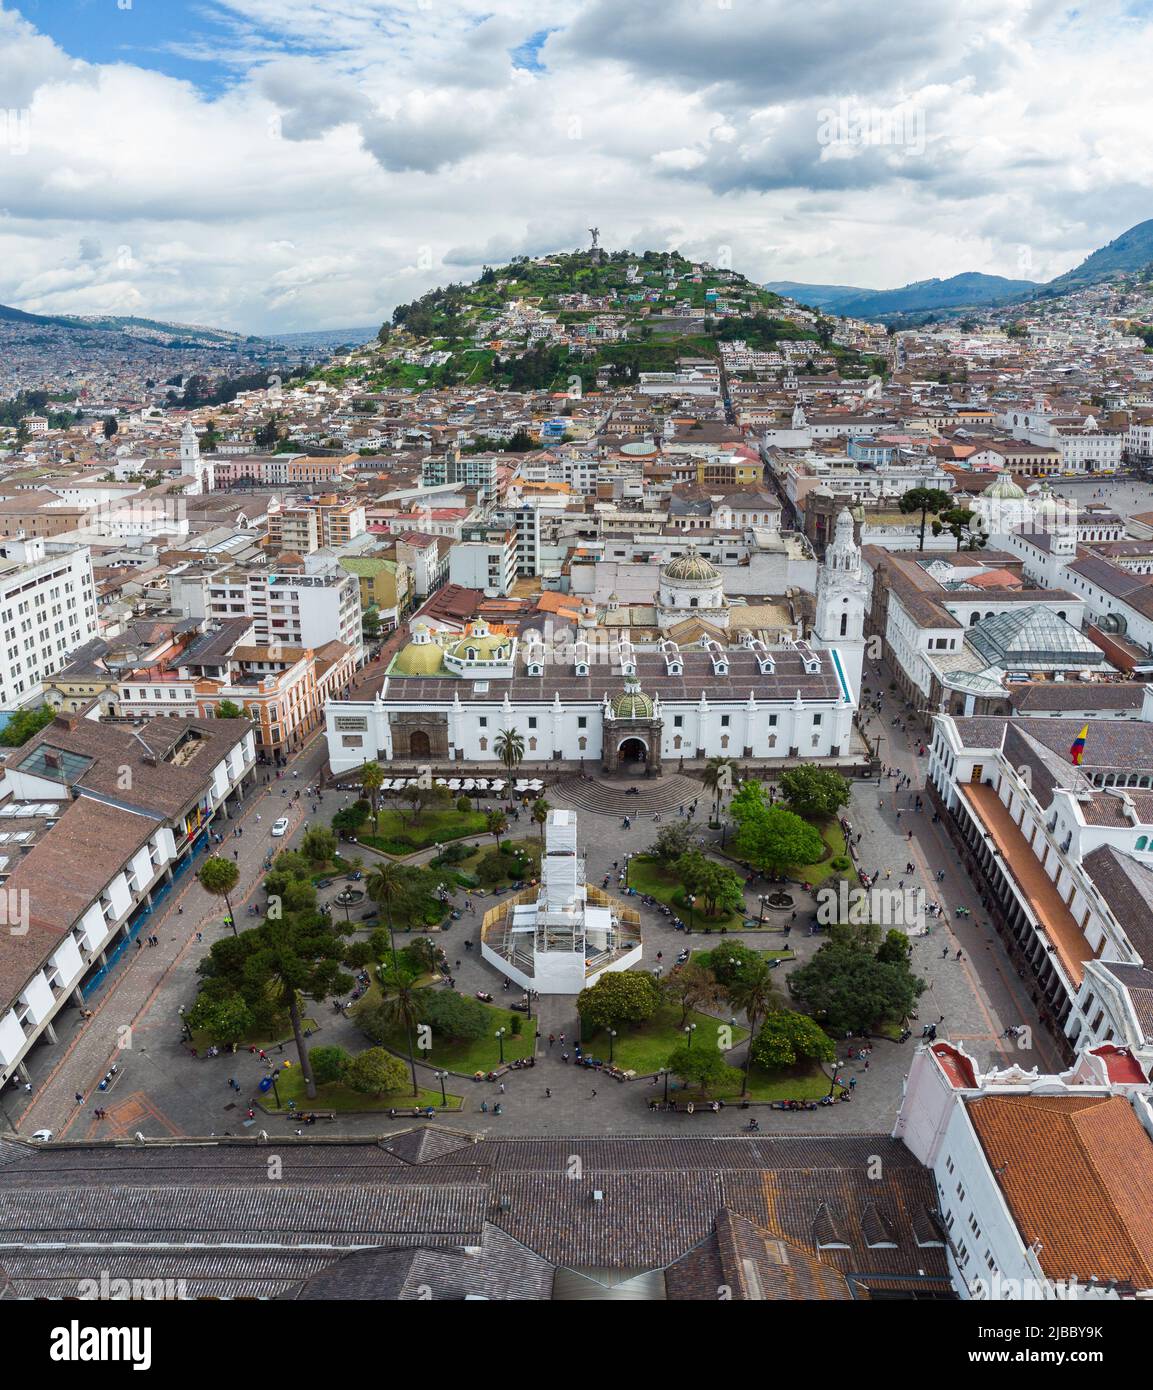 Quito, Ecuador: Aerial view of the Plaza Grande in the heart of Quito historic city center in Ecuador capital city with the El Panecillo hill in the b Stock Photo